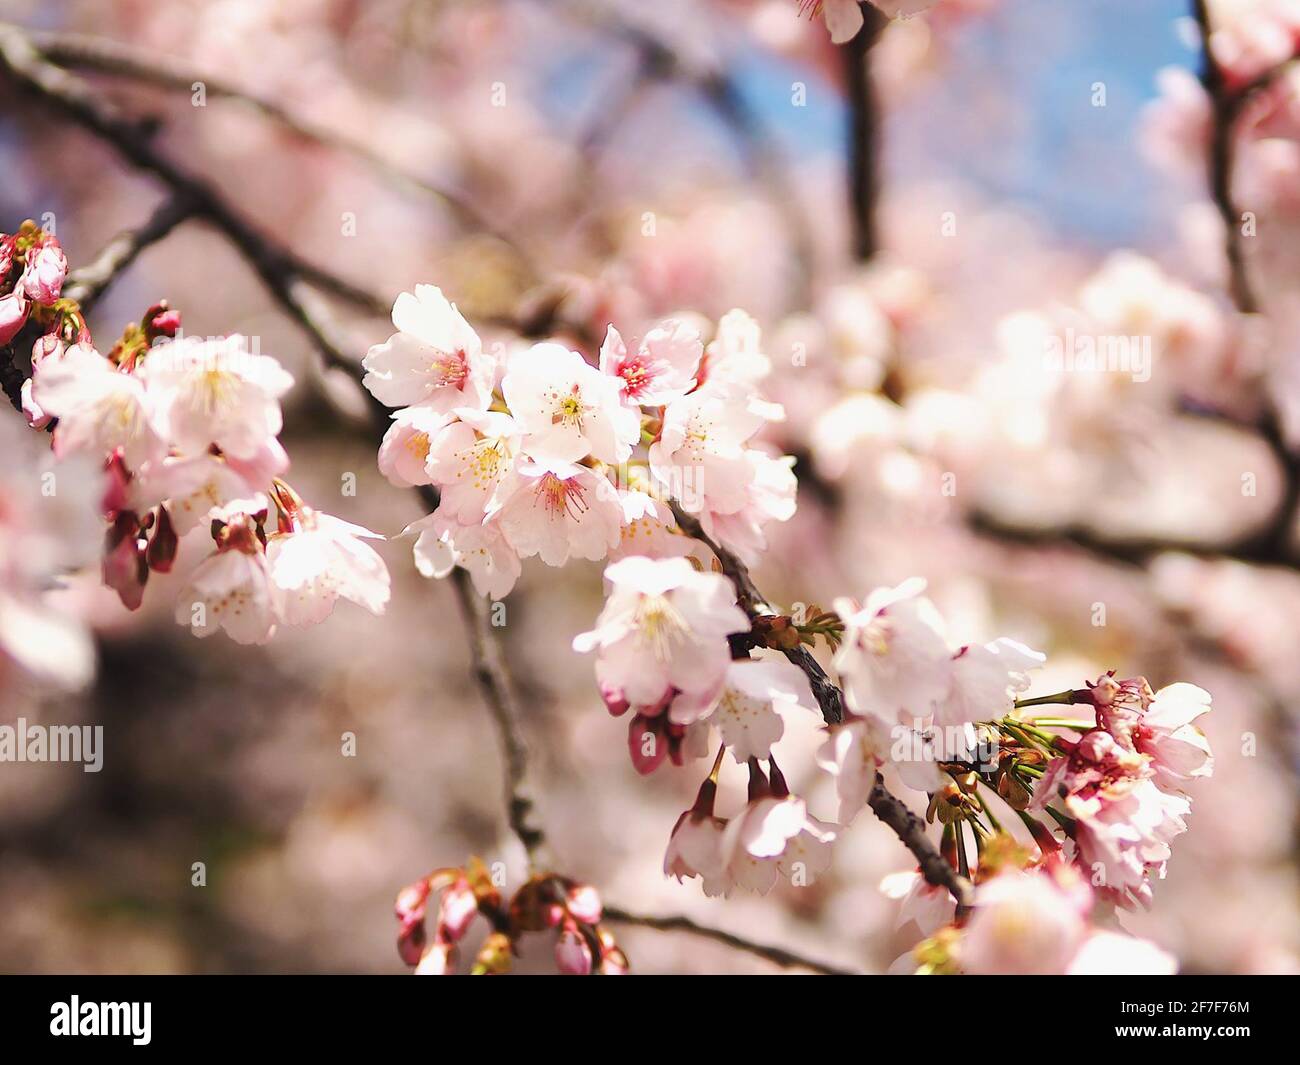 Cherry trees in full blossom Stock Photo